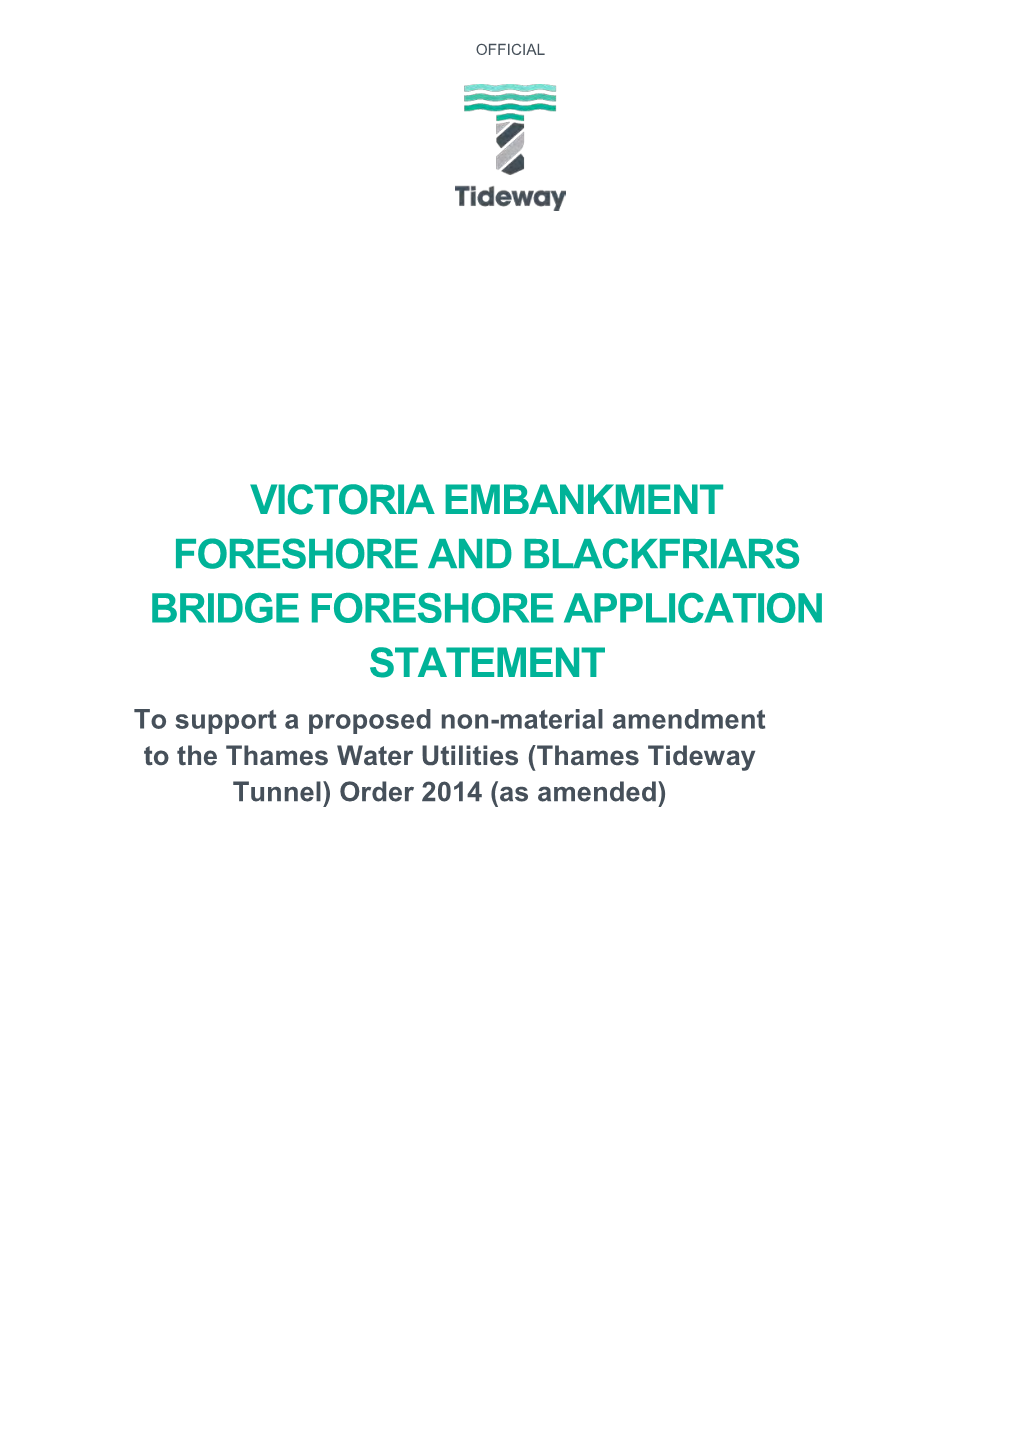 Victoria Embankment Foreshore and Blackfriars